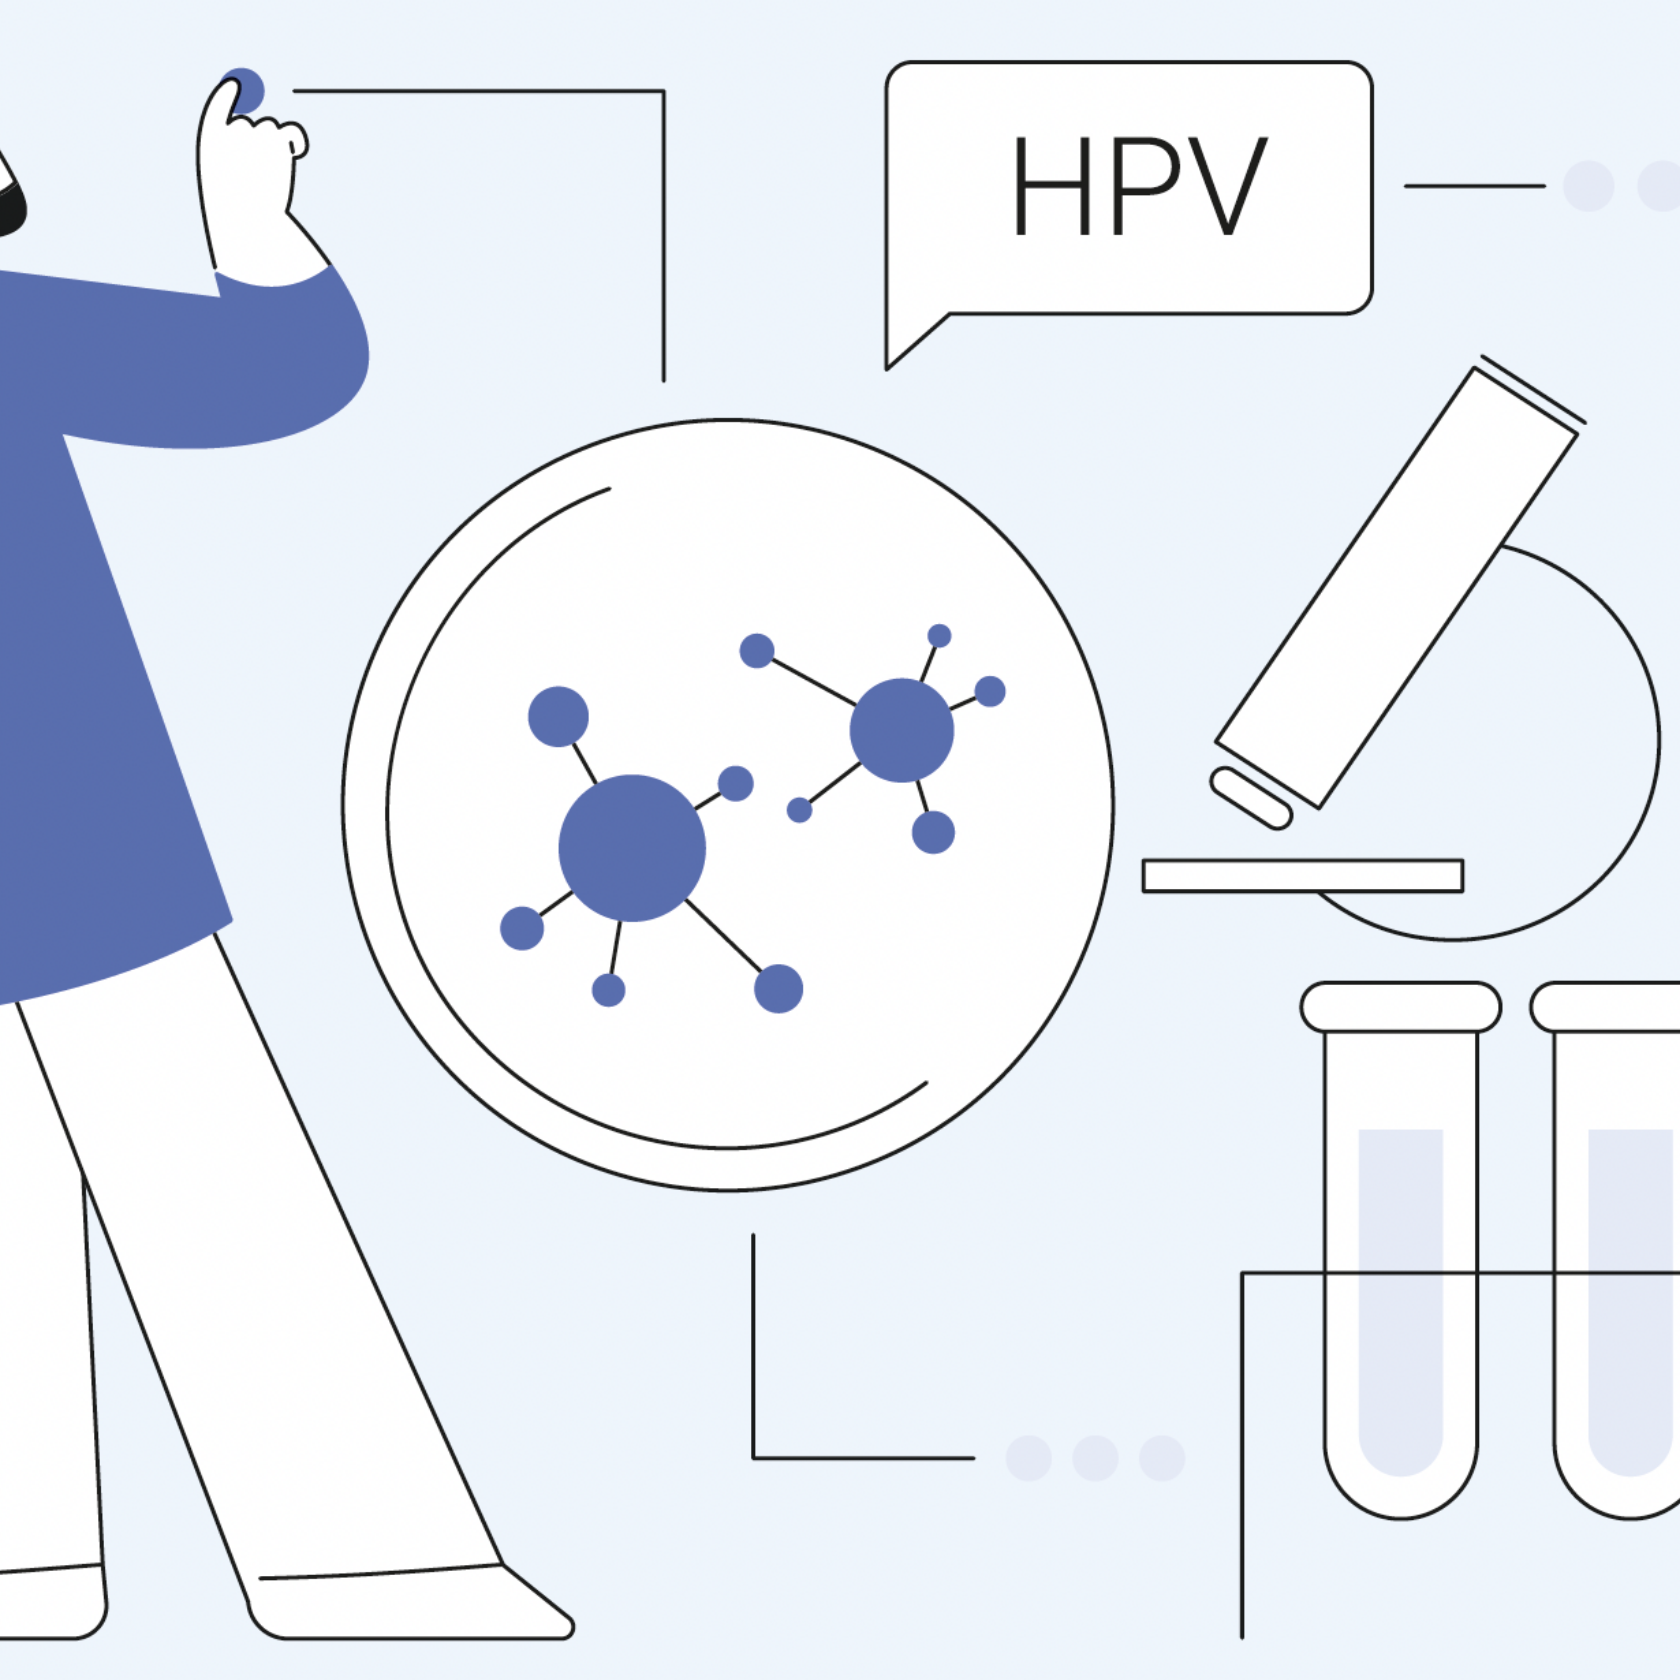 Bakterienprofil des vaginalen Mikrobioms bei HPV-Positivität